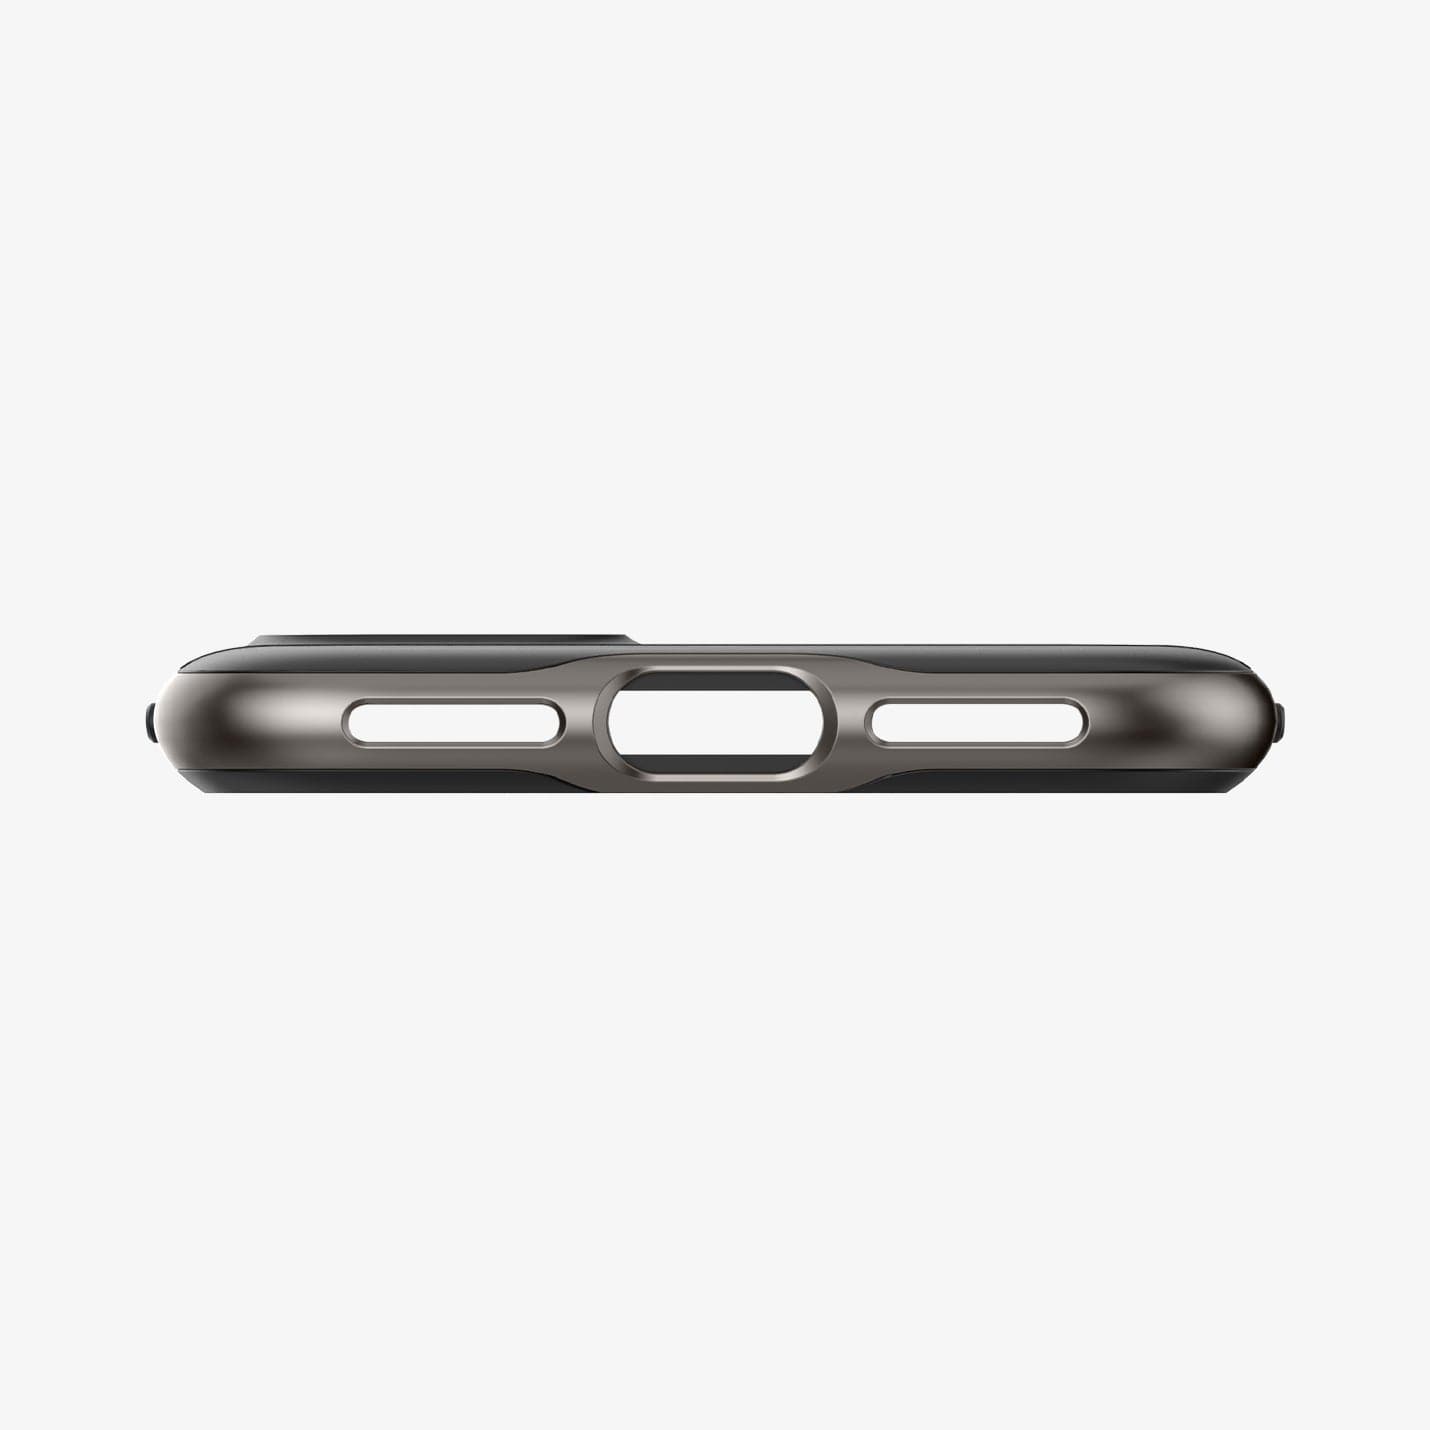 054CS22358 - iPhone 8 Series Neo Hybrid Case in Gunmetal showing the bottom